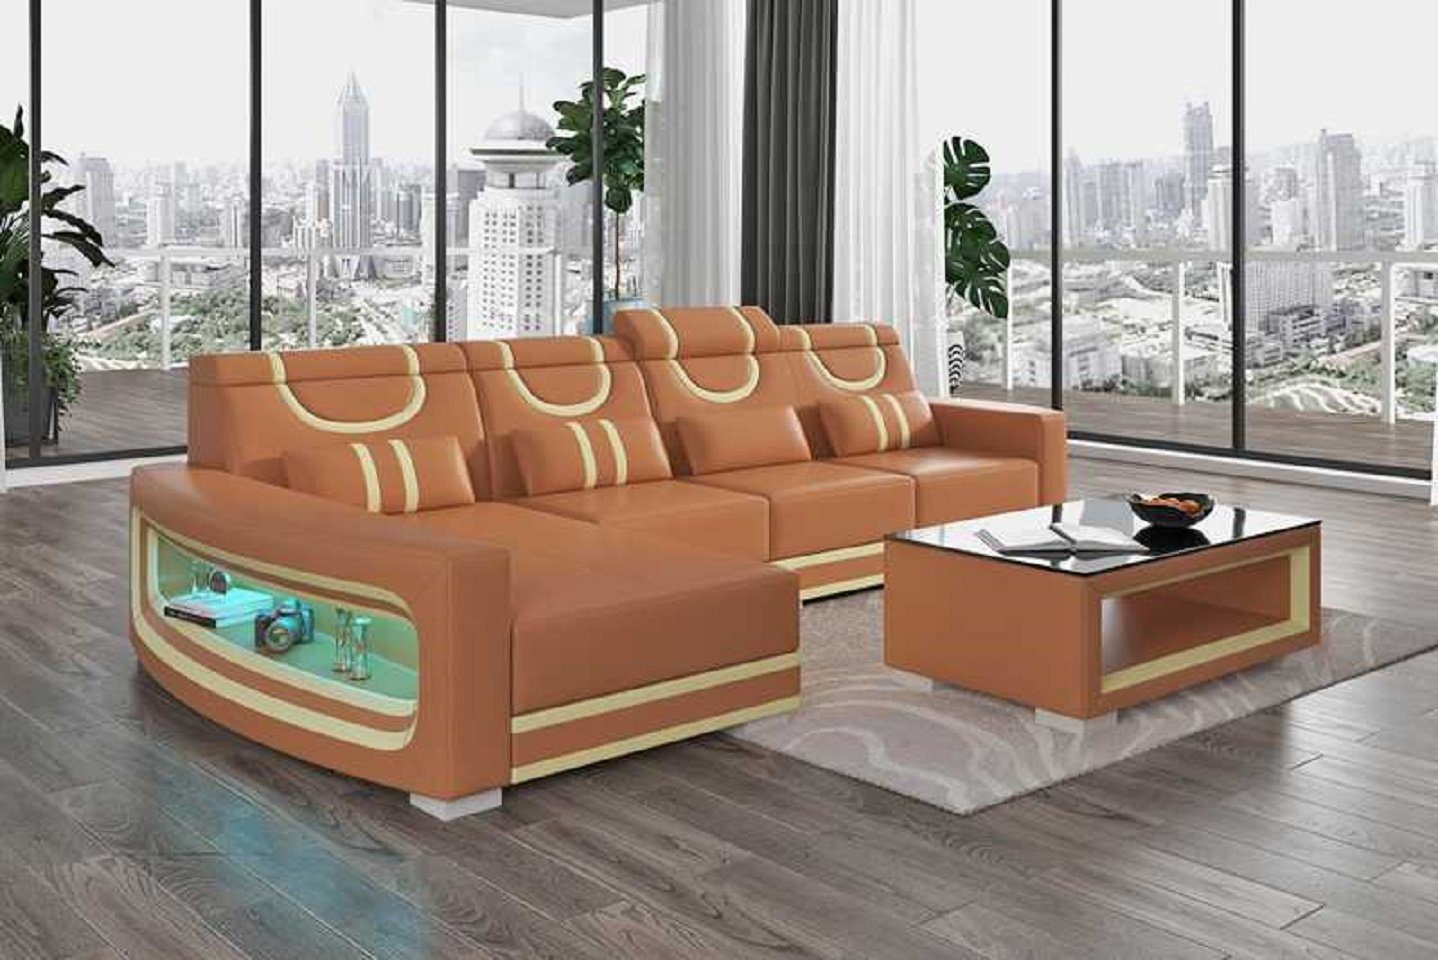 Ecksofa Europe Teile, Sofa Orange Liege Form 3 Braun Sofas Ecksofa Couchen, Modern Ledersofa L JVmoebel in Luxus Made